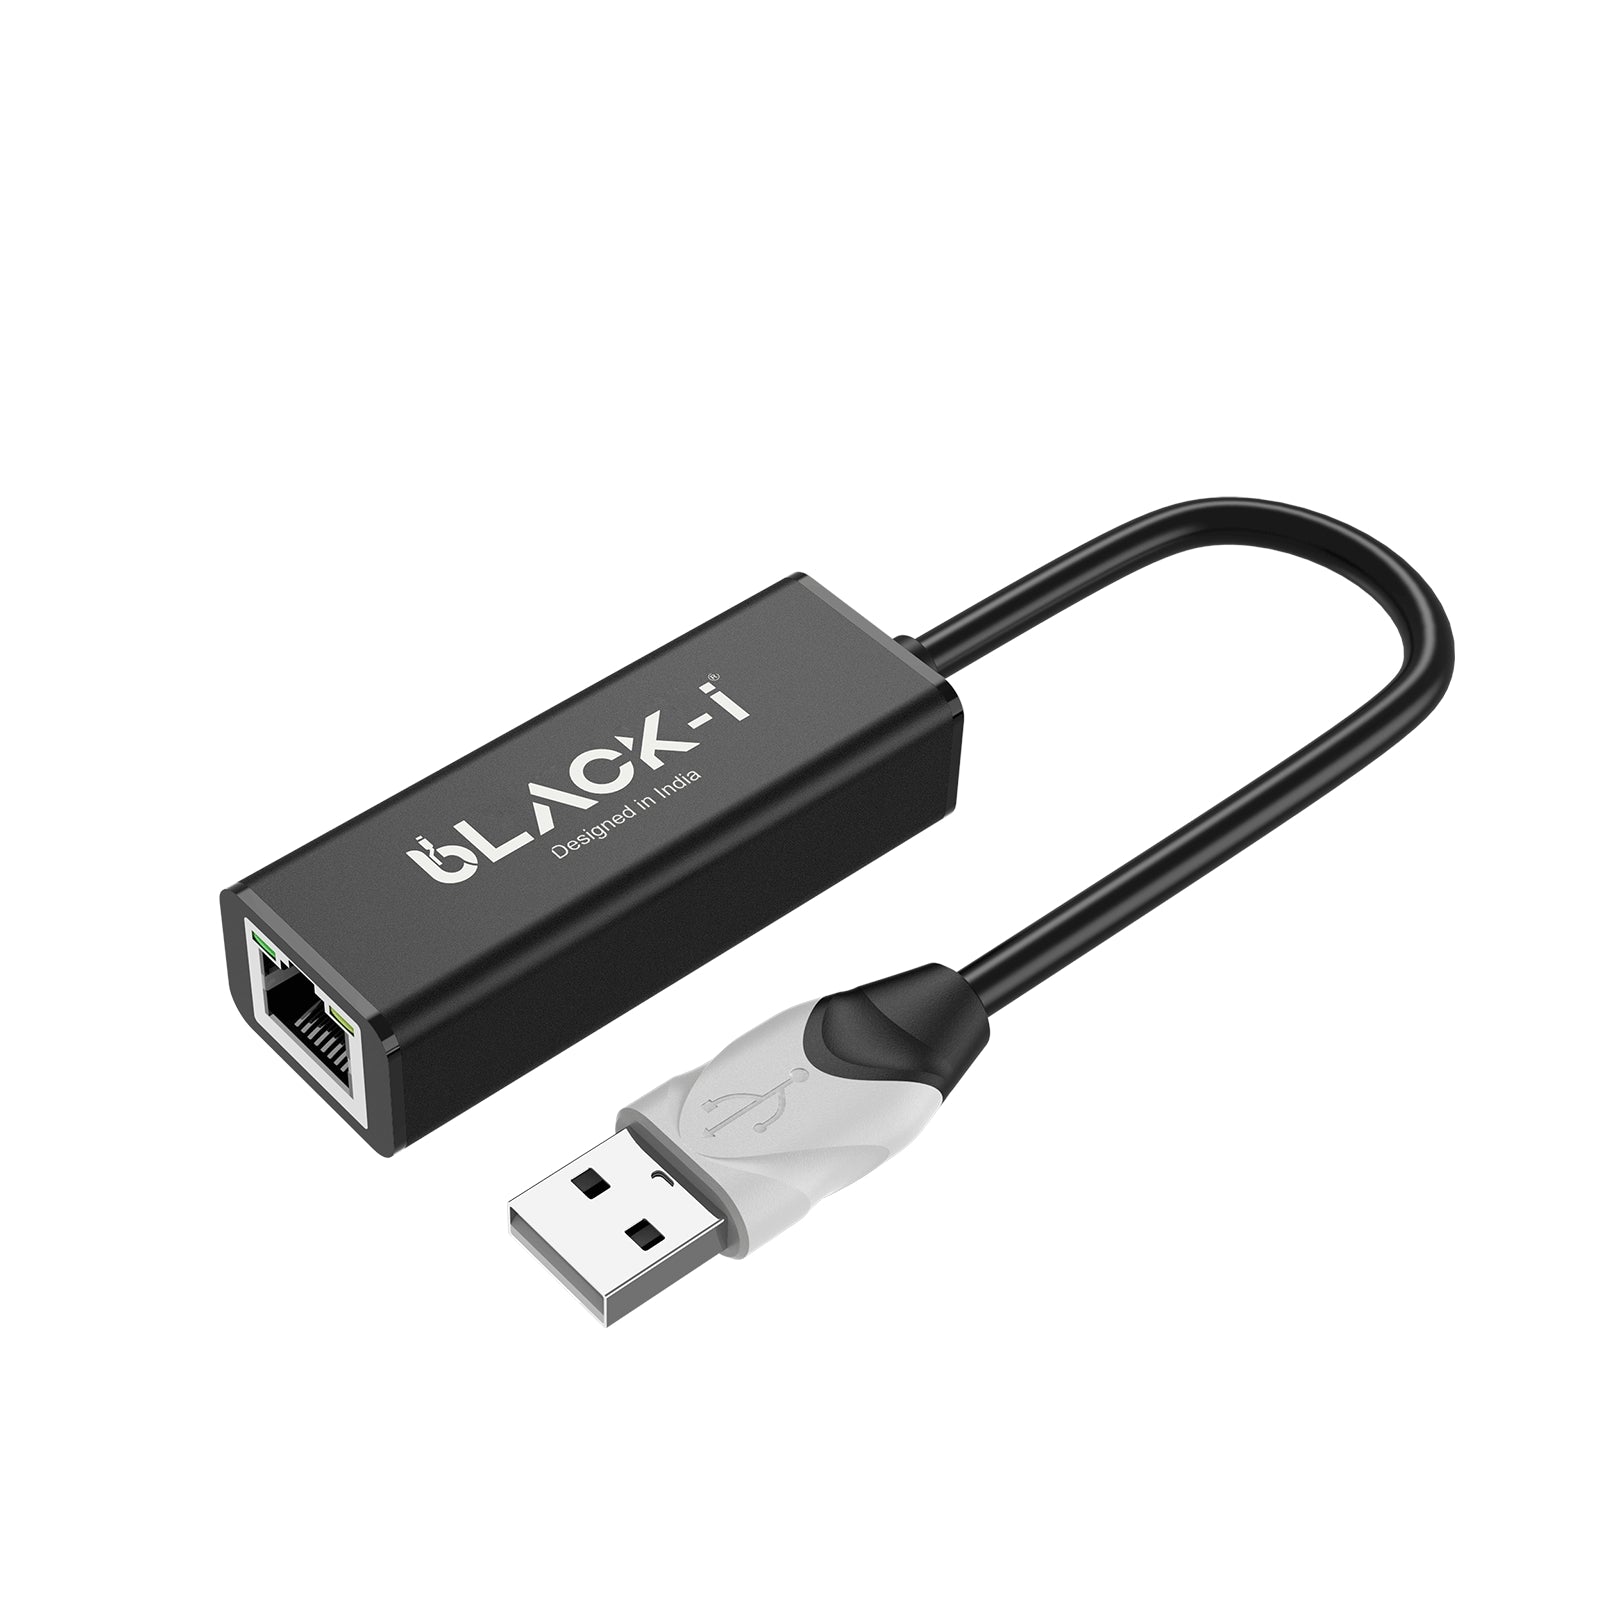 Black-i USB 2.0 to LAN 10/100 Mbps Converter